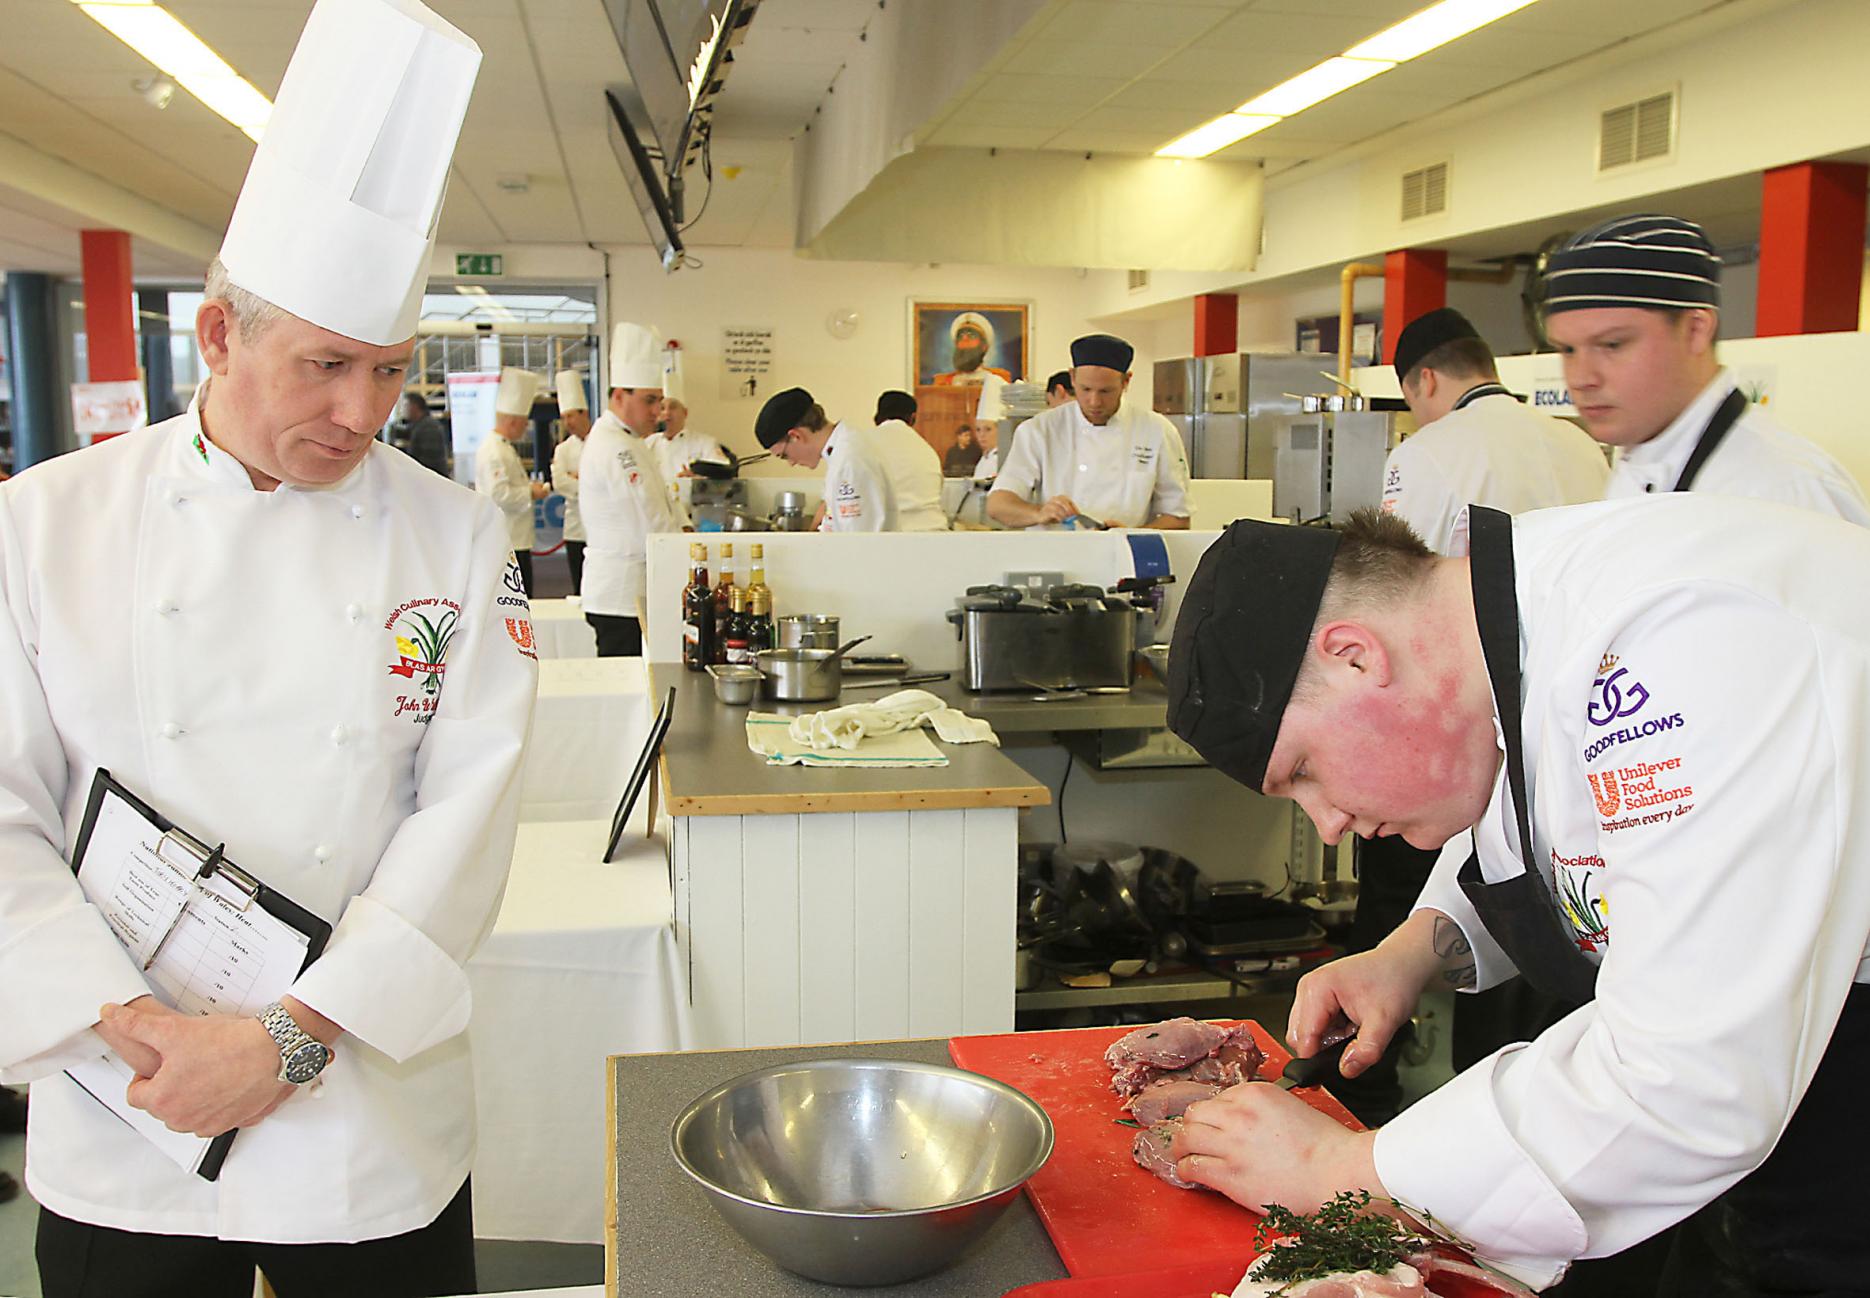 Search Junior Chef Wales 2015 begins next week